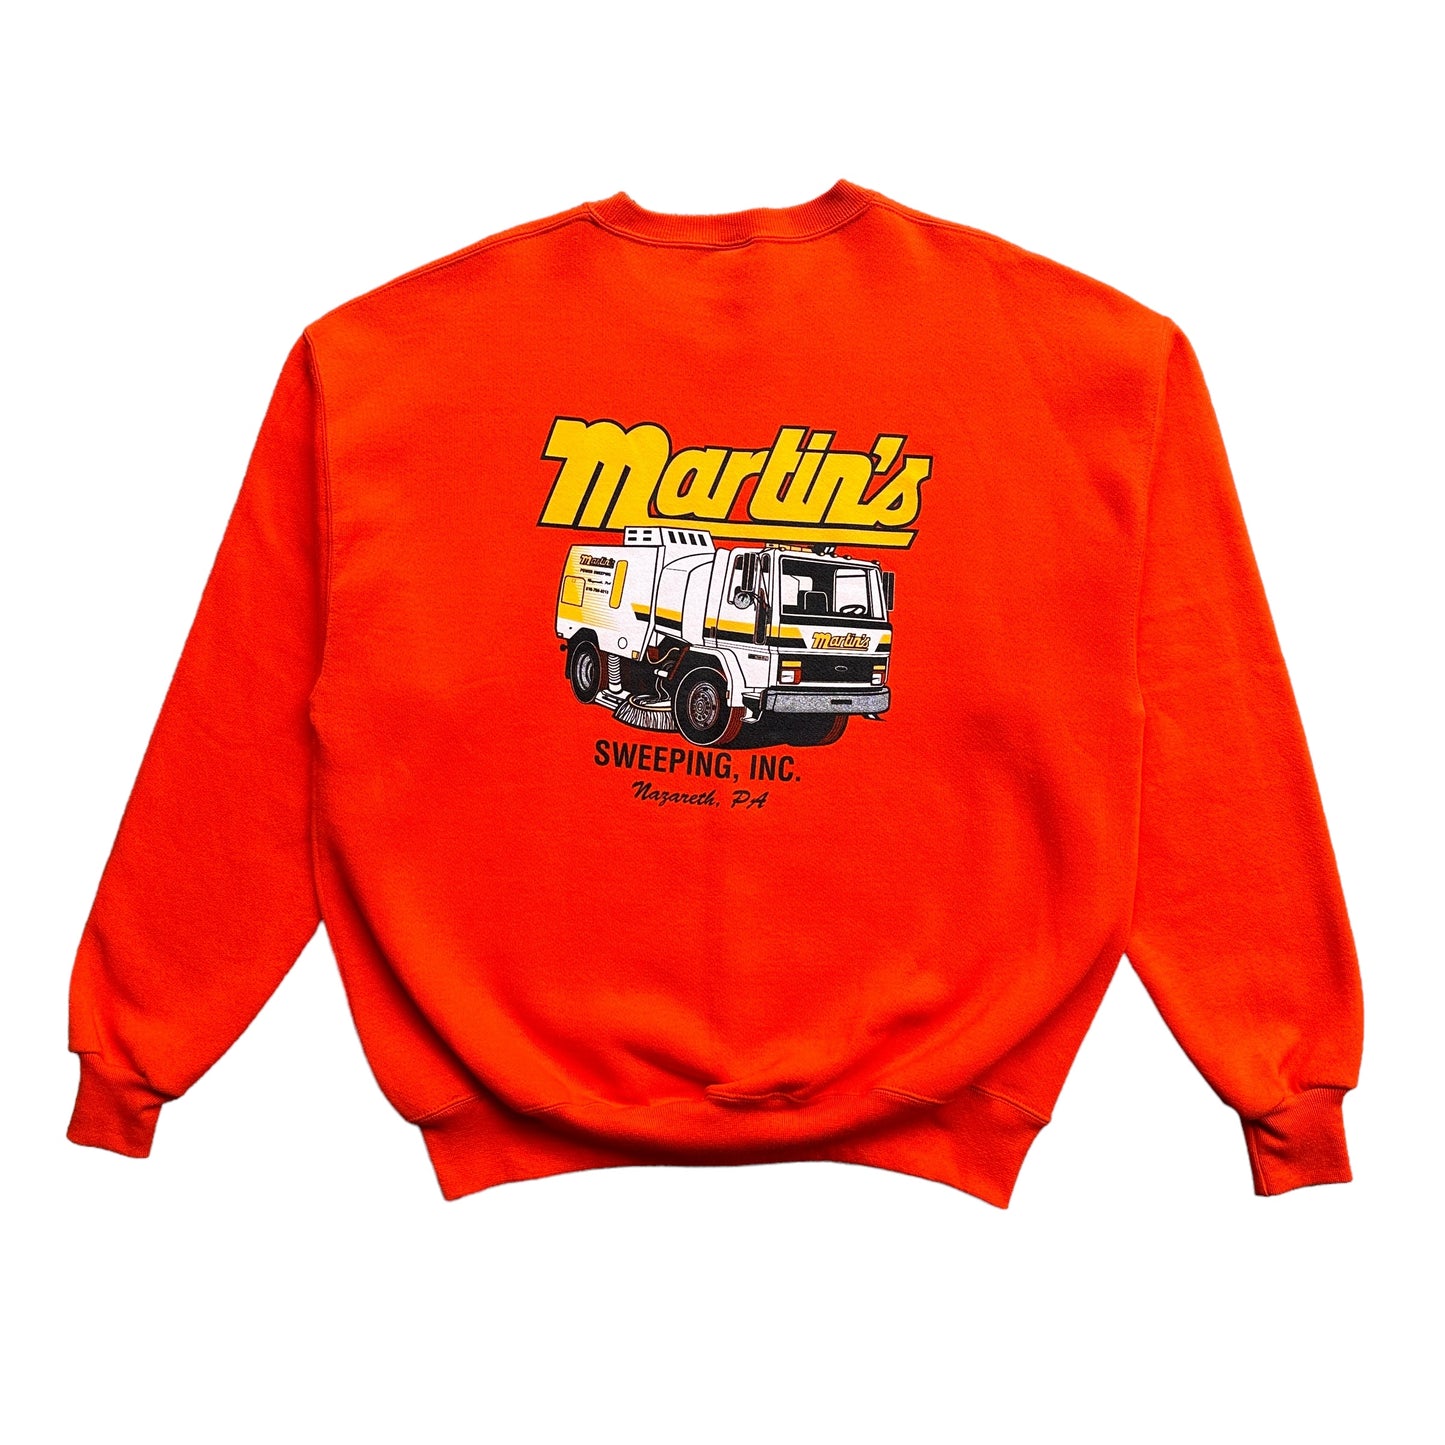 90s Martins sweeping inc sweatshirt XL